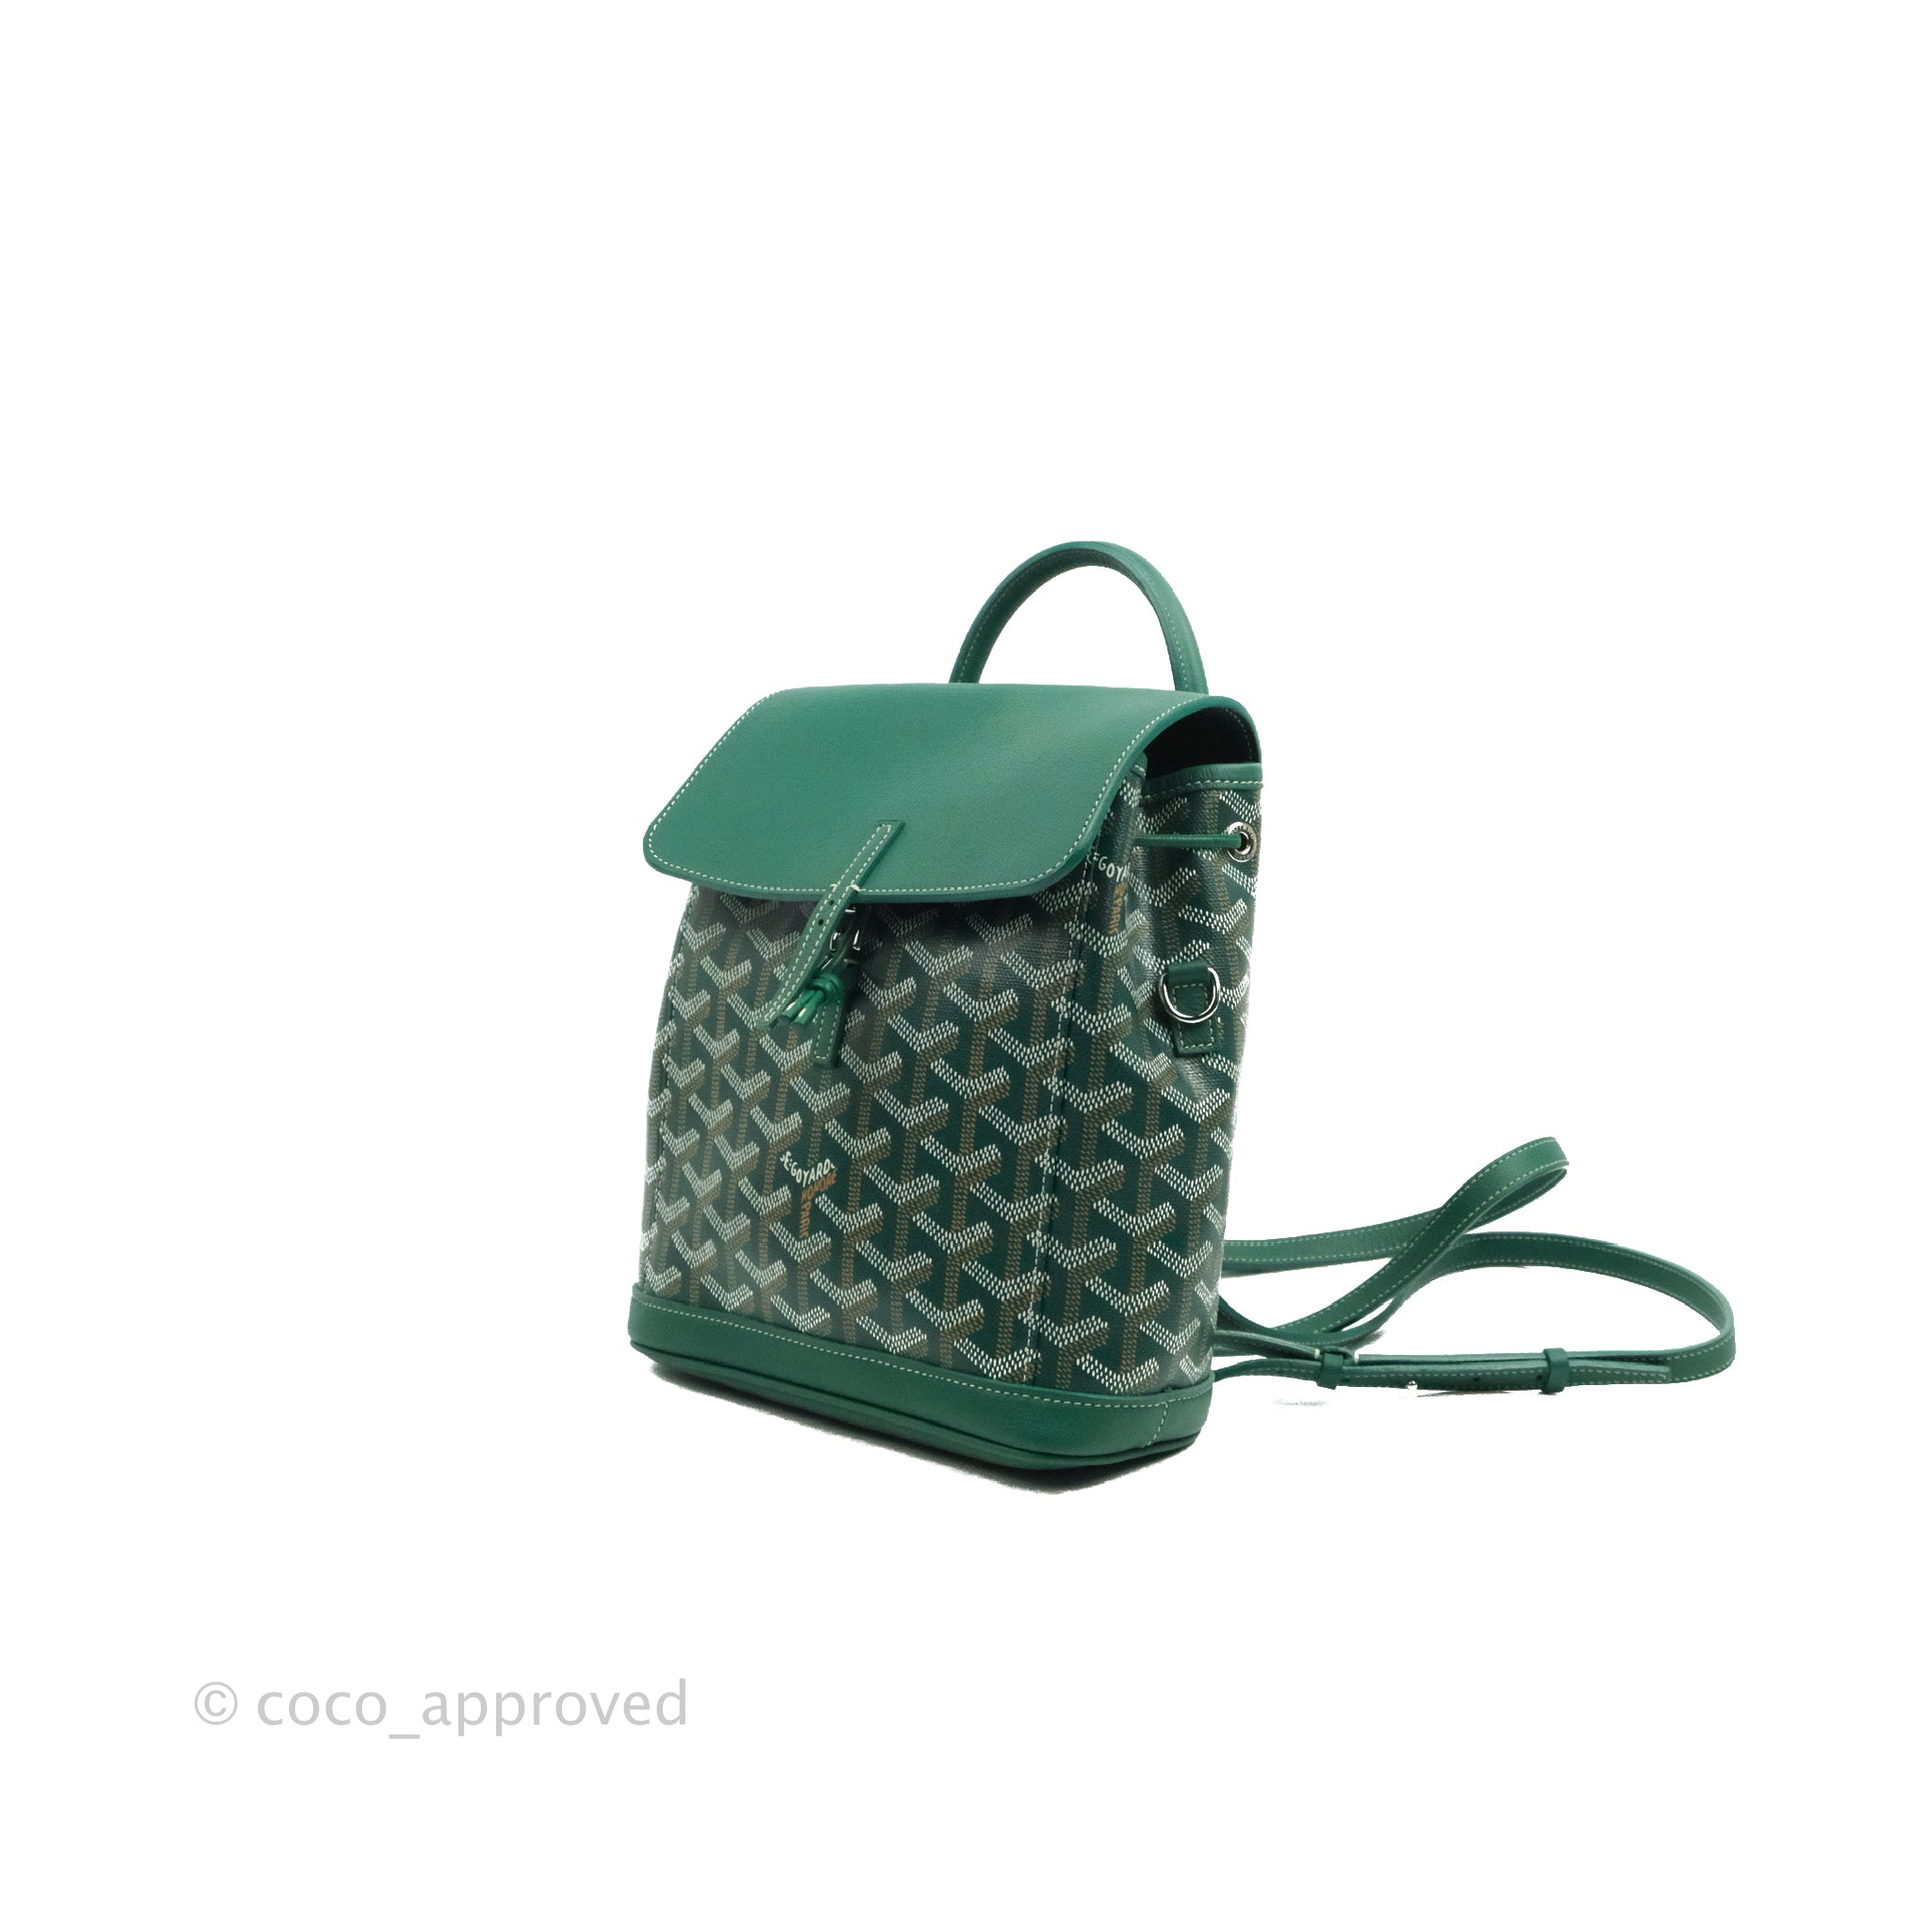 Goyard, Bags, Goyardgoyardine Calfskin Mini Alpin Backpack Blue